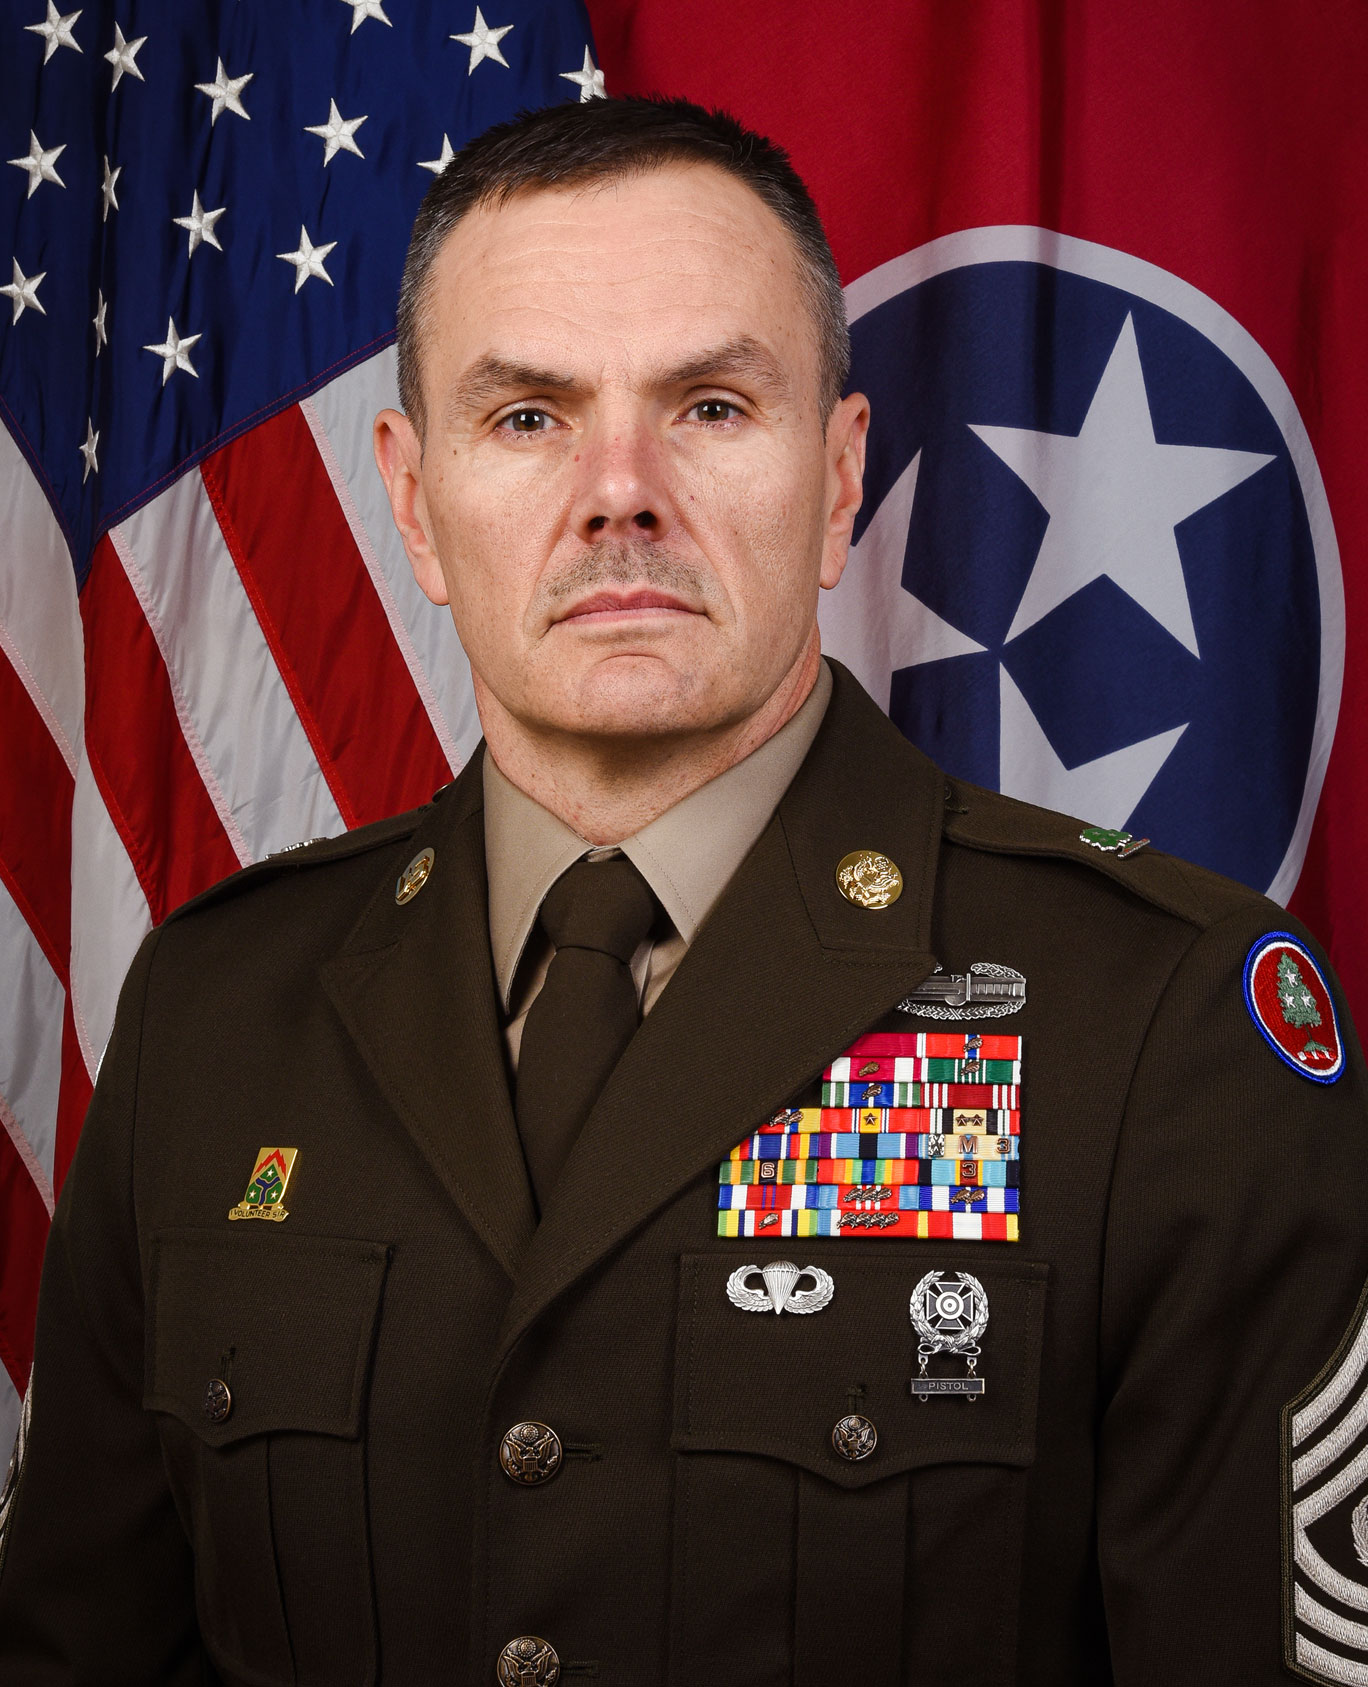 An image of Command Sergeant Major James Crockett